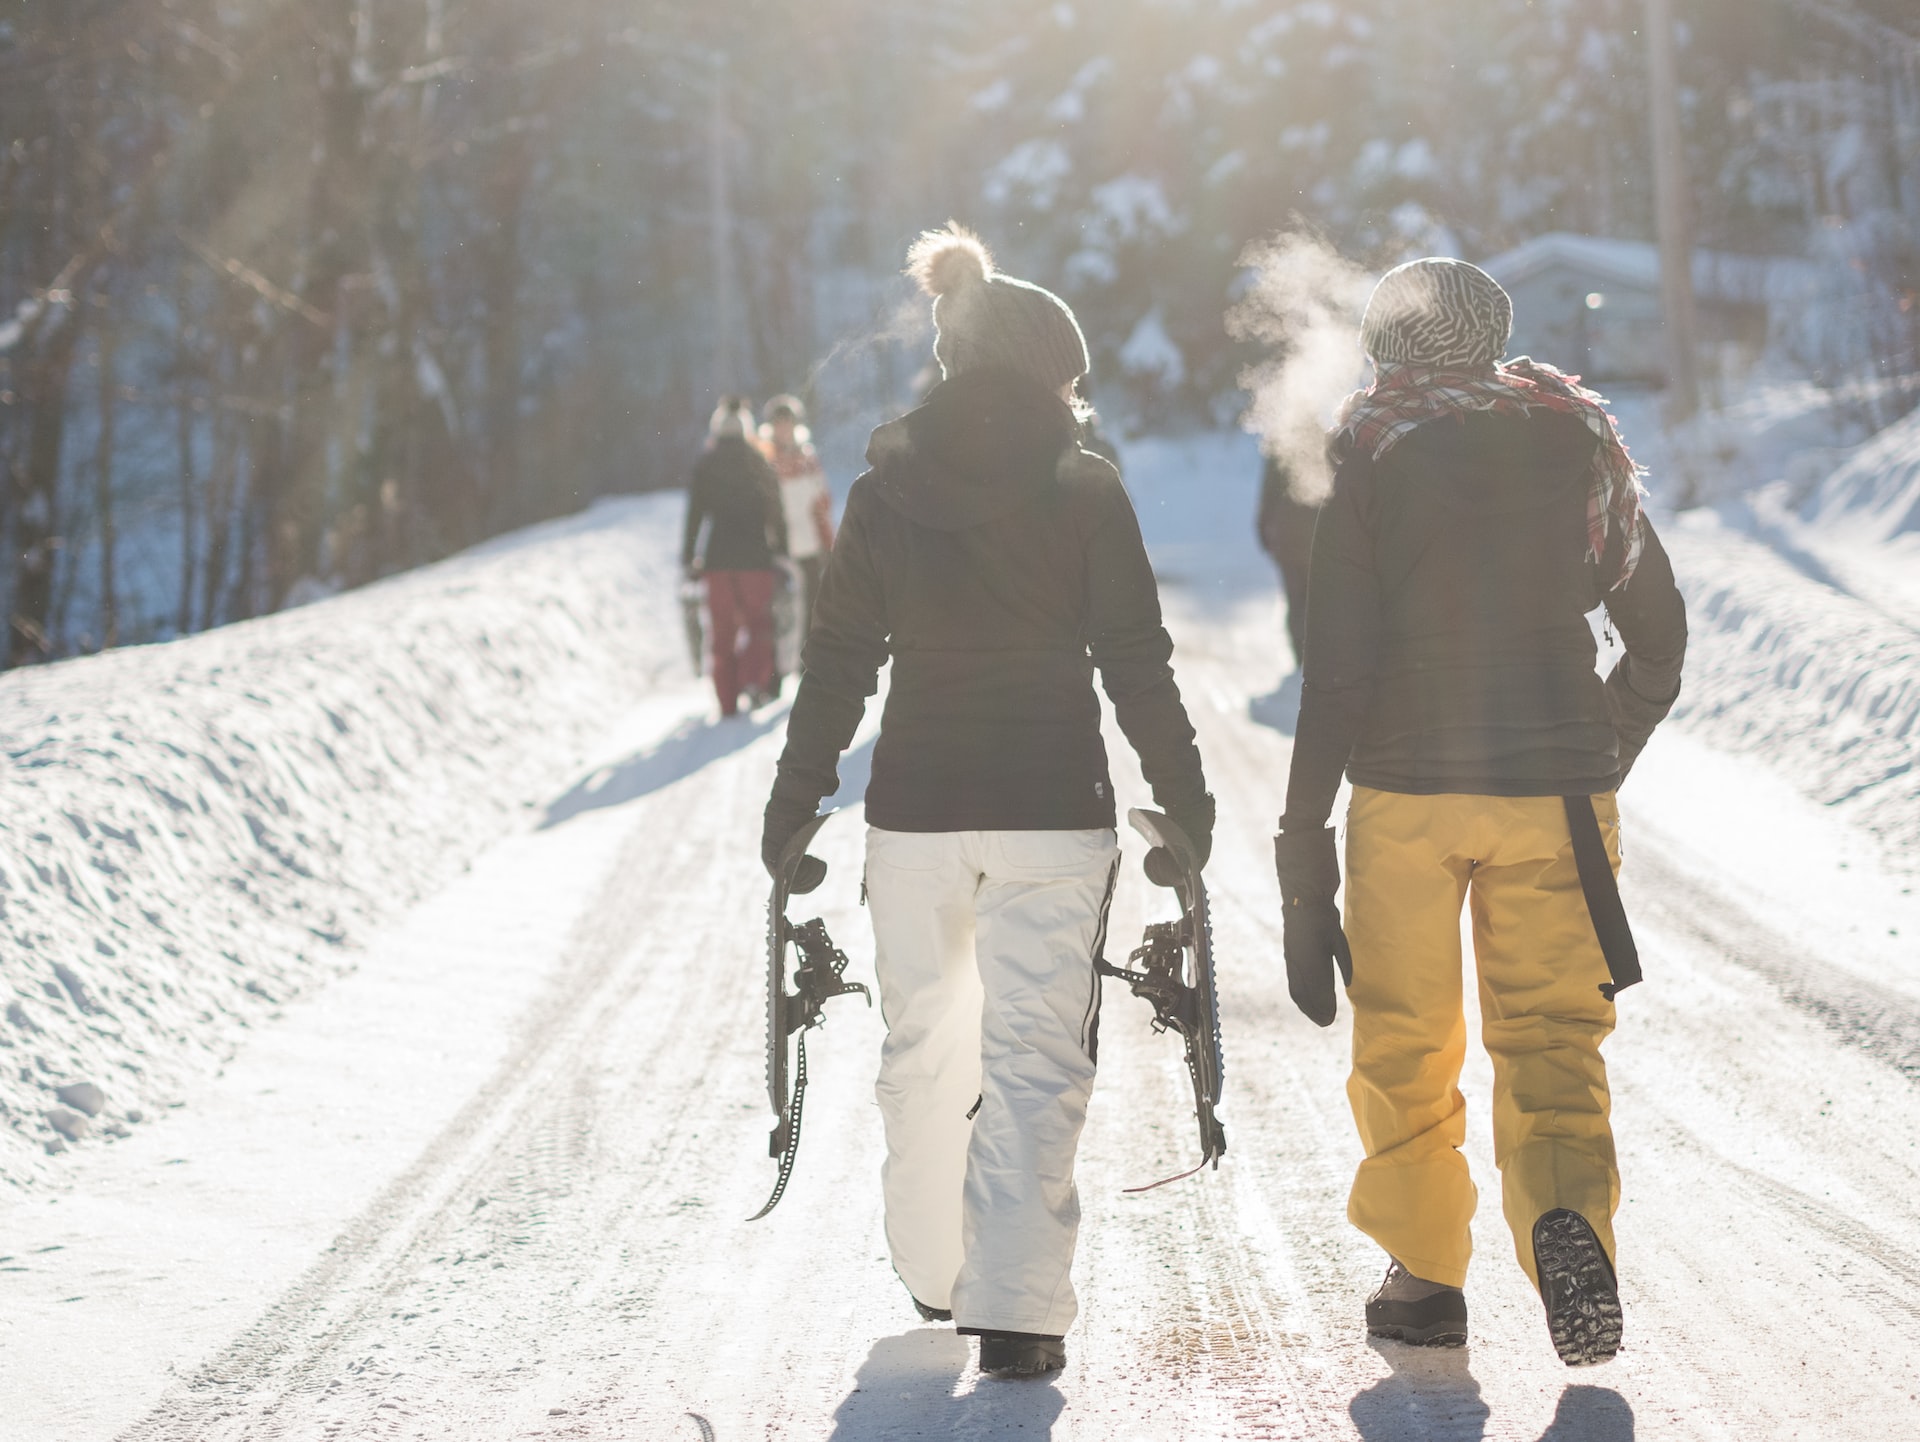 Popularity of Korea Ski Resort and Winter Sports